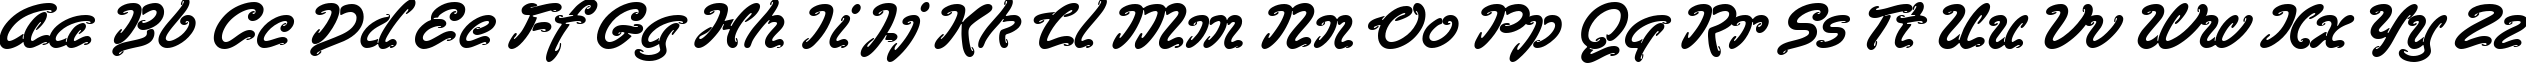 Пример написания английского алфавита шрифтом LasVegasD